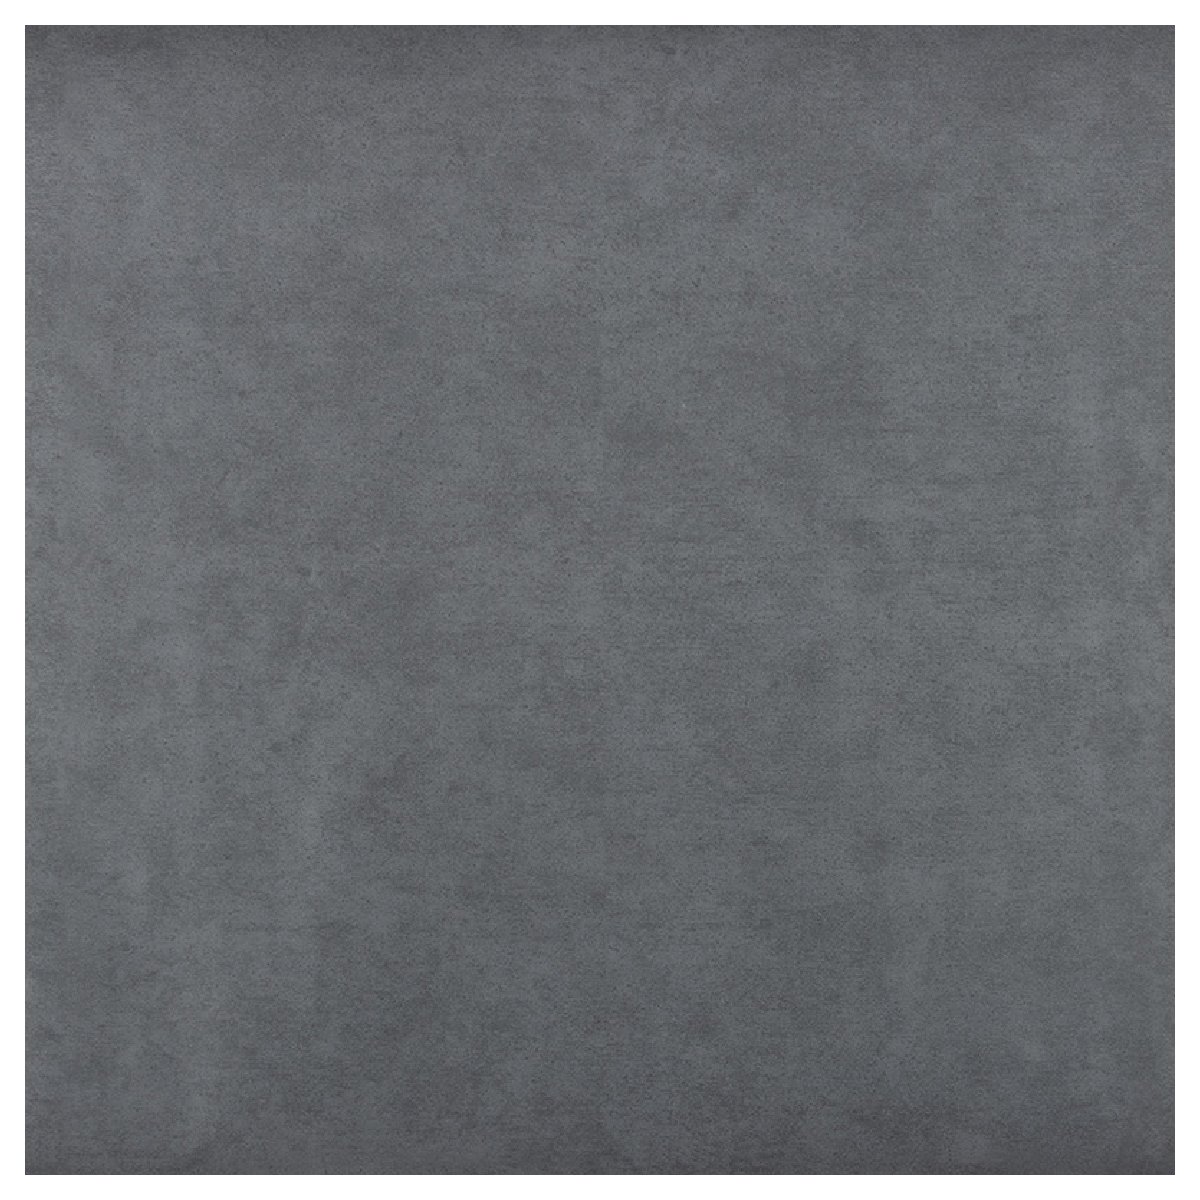 Пленка самоклеящаяся 0,45х8м, бетон серый (104899)Купить